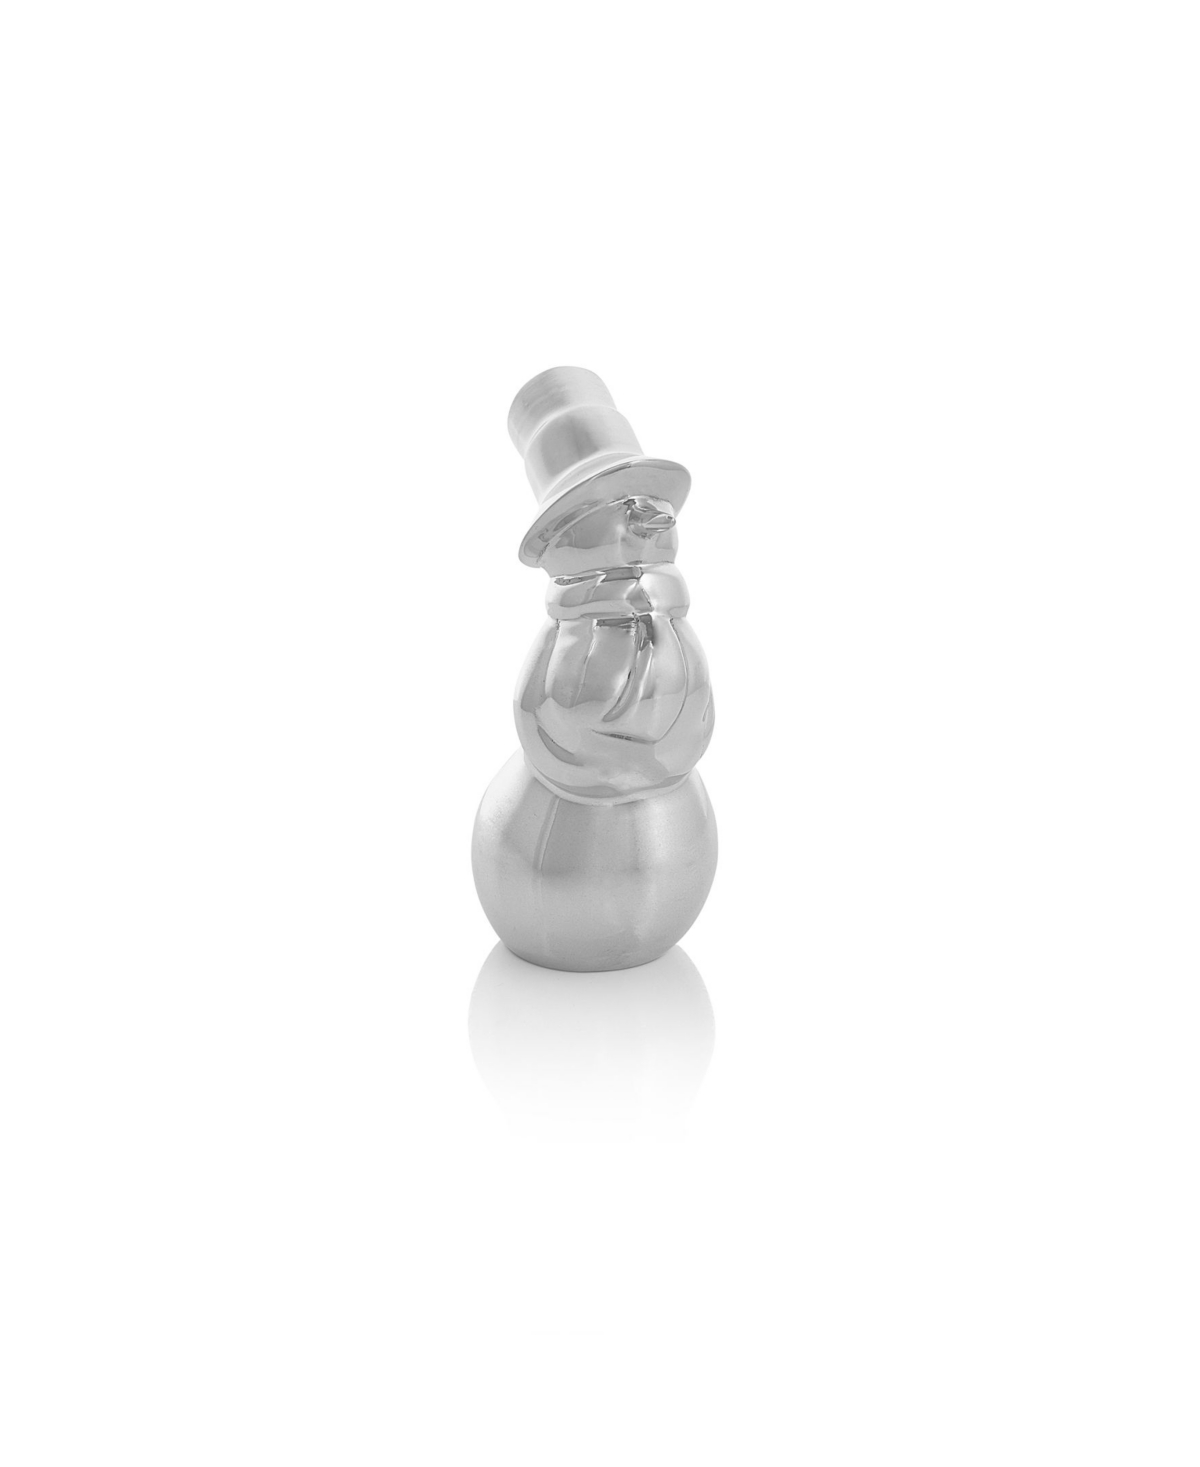 Miniature Snowman Figurine - Silver-Tone